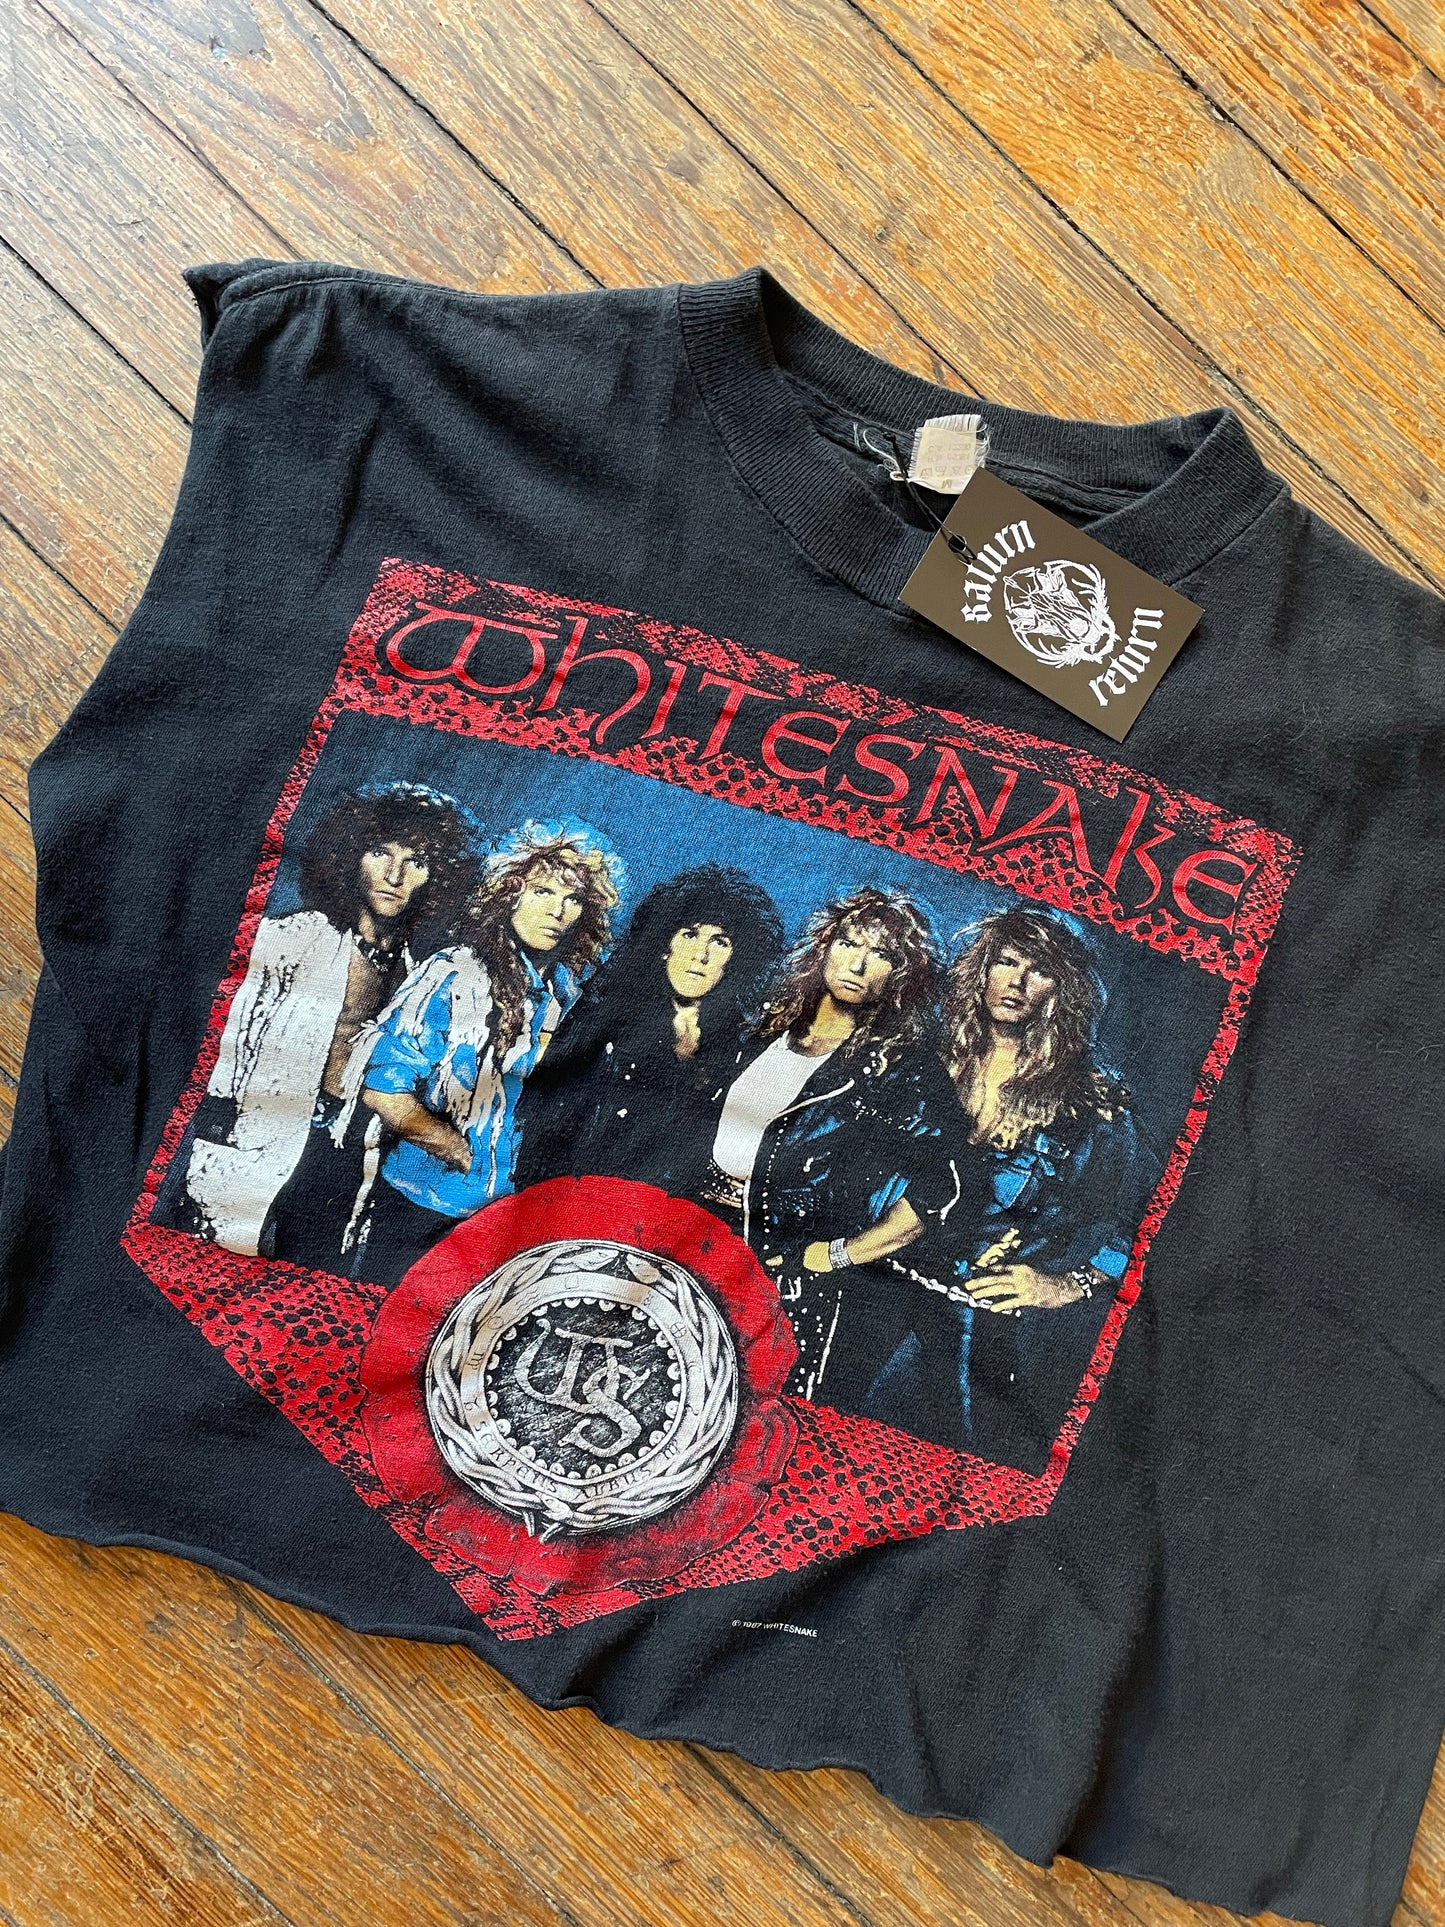 Vintage 1987 Whitesnake Cropped Sleeveless Tour T-Shirt